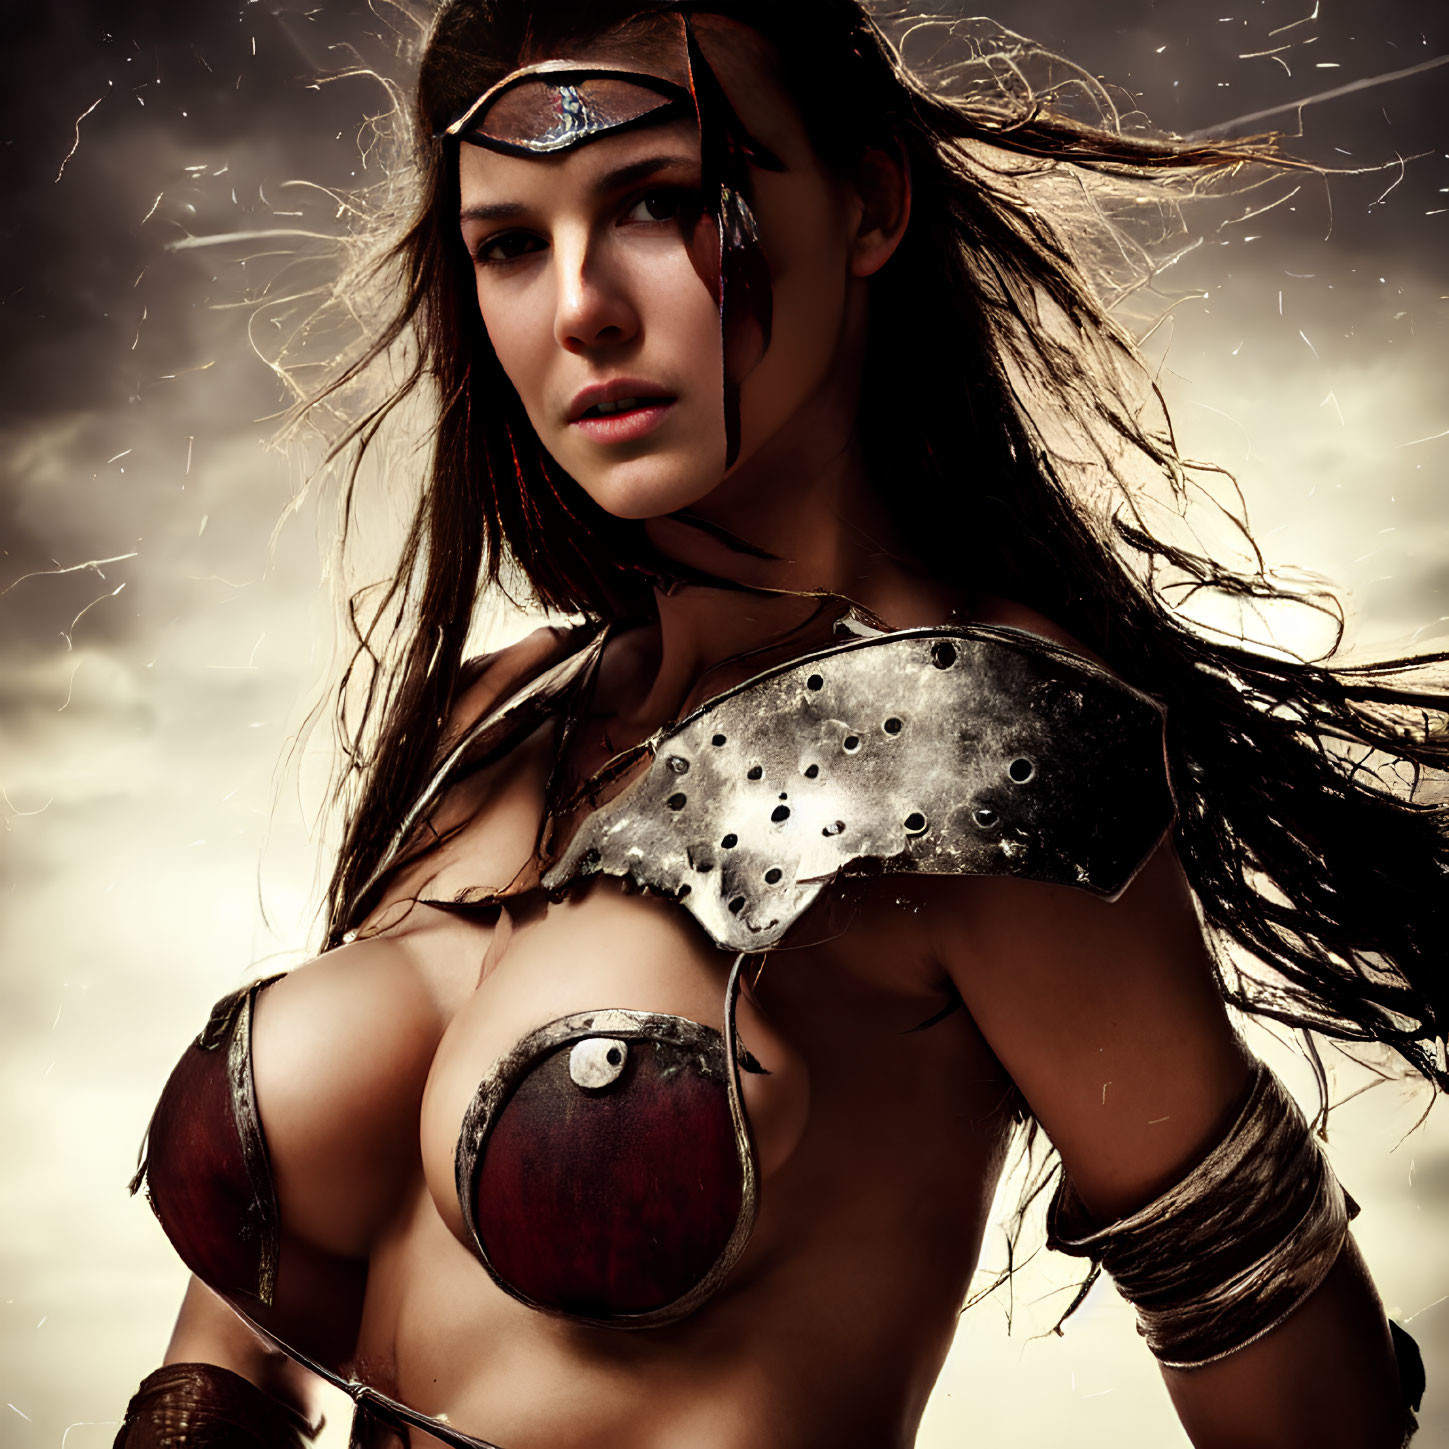 Warrior woman in metal armor with flowing dark hair under dramatic sky